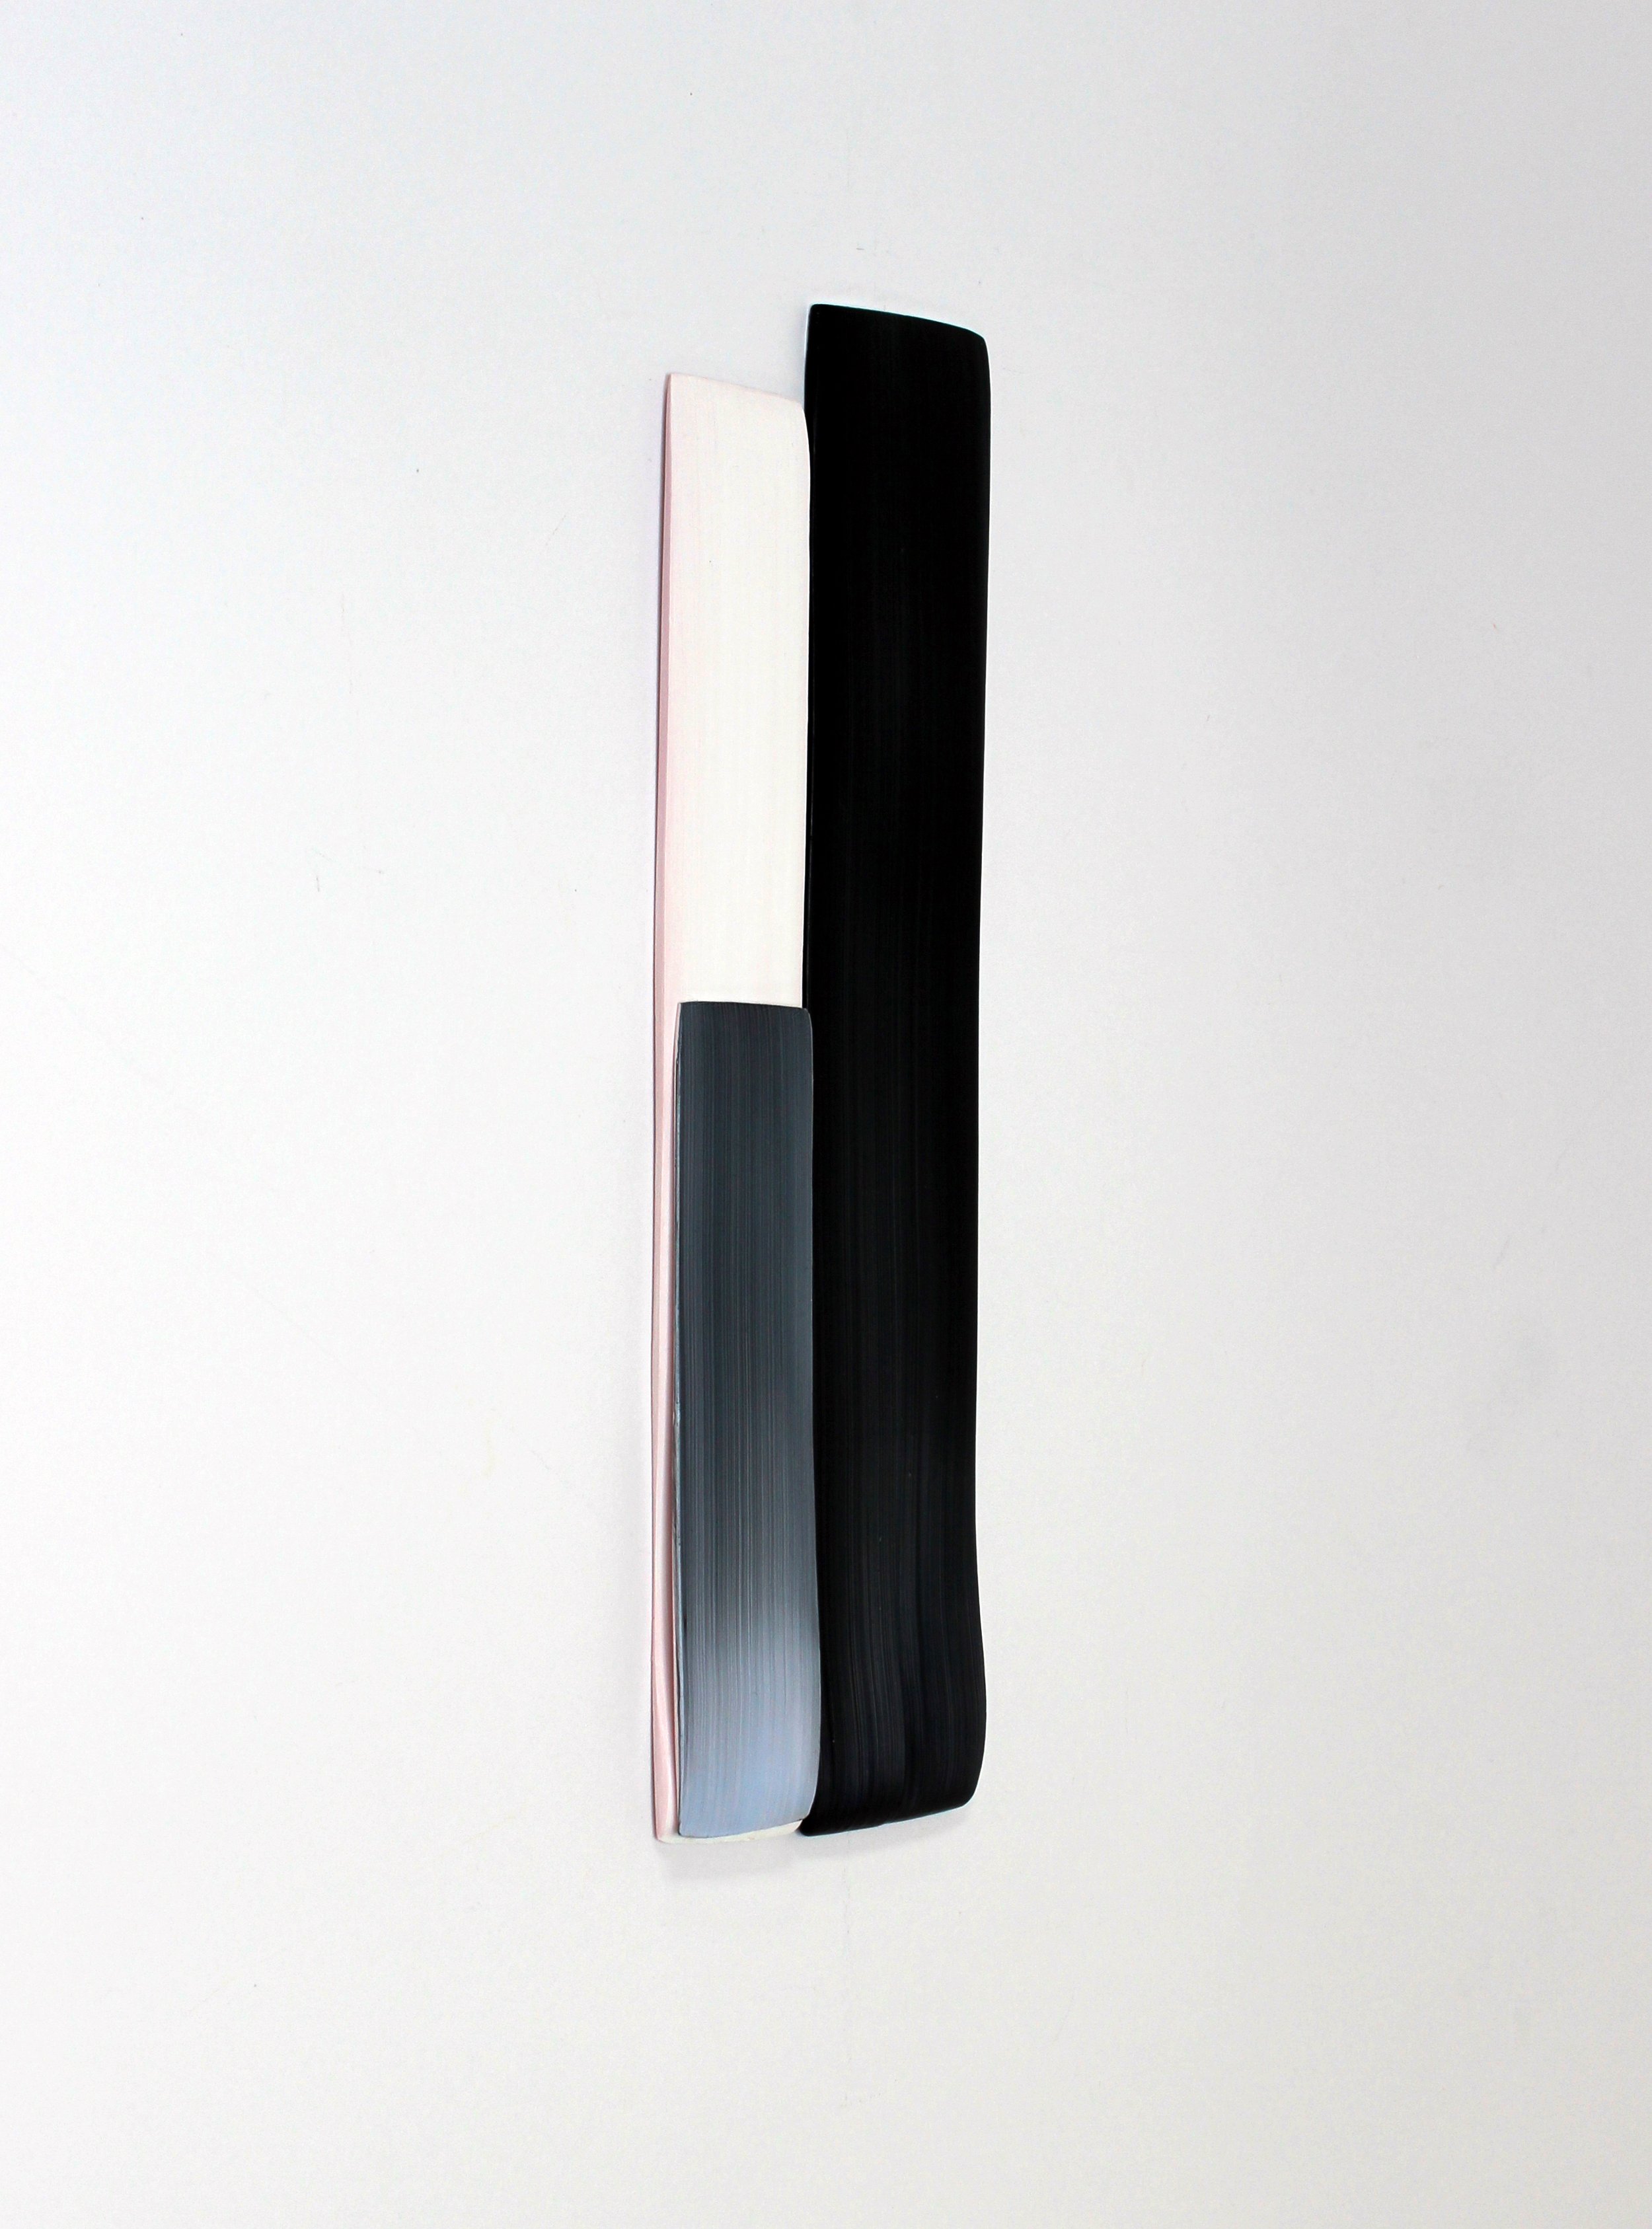 14.M. B. O’Toole, Gesture Series II, Oil on plaster, dimensions variable, 2014-2022.JPG